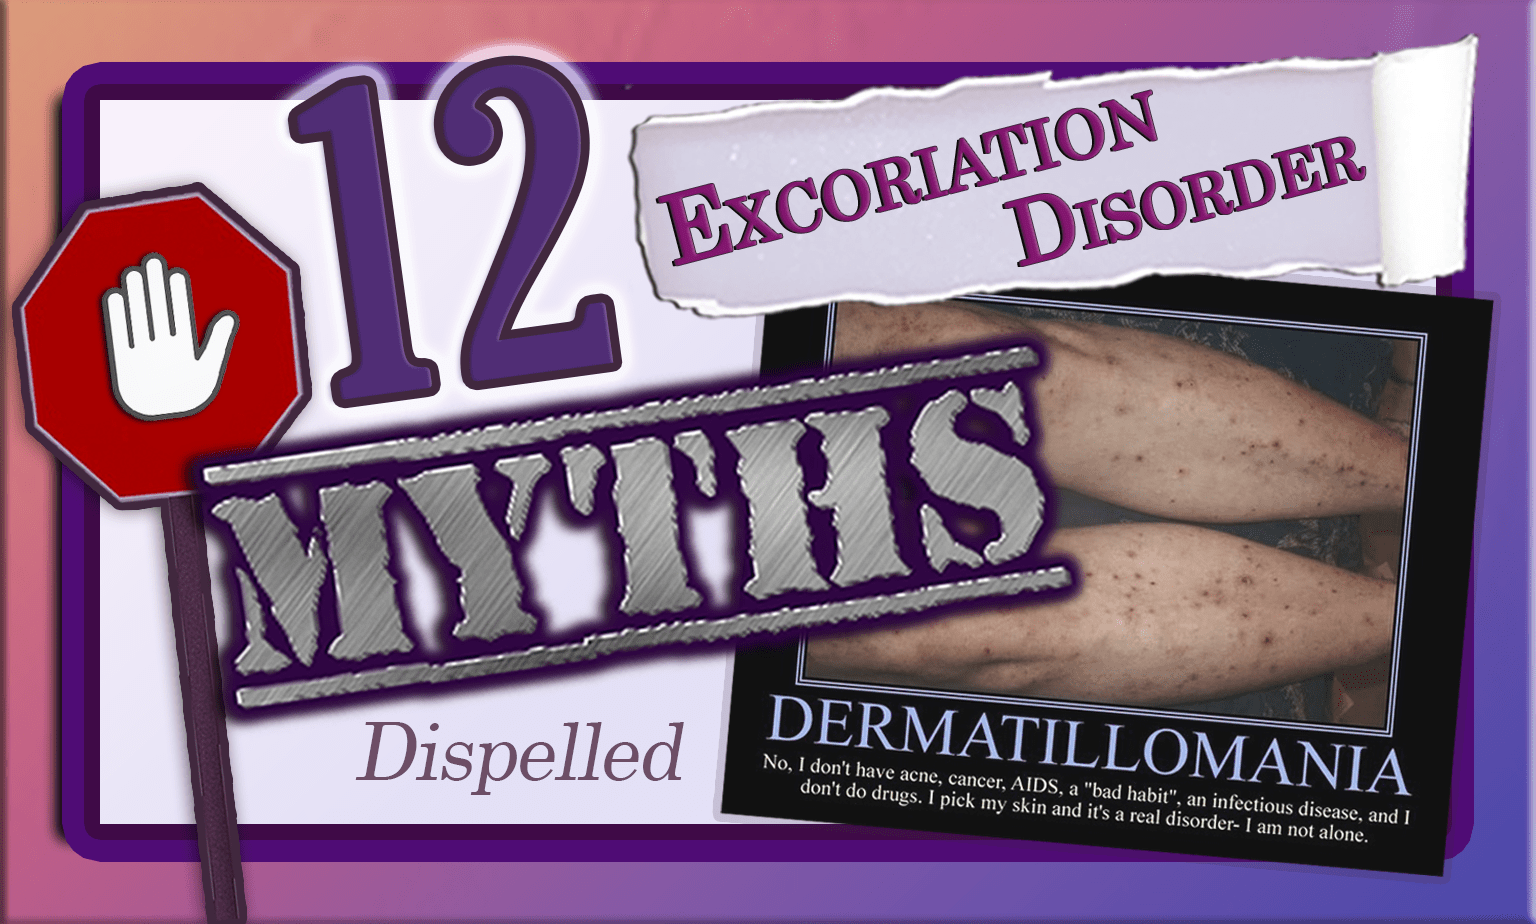 The #1 Misconception About Dermatillomania